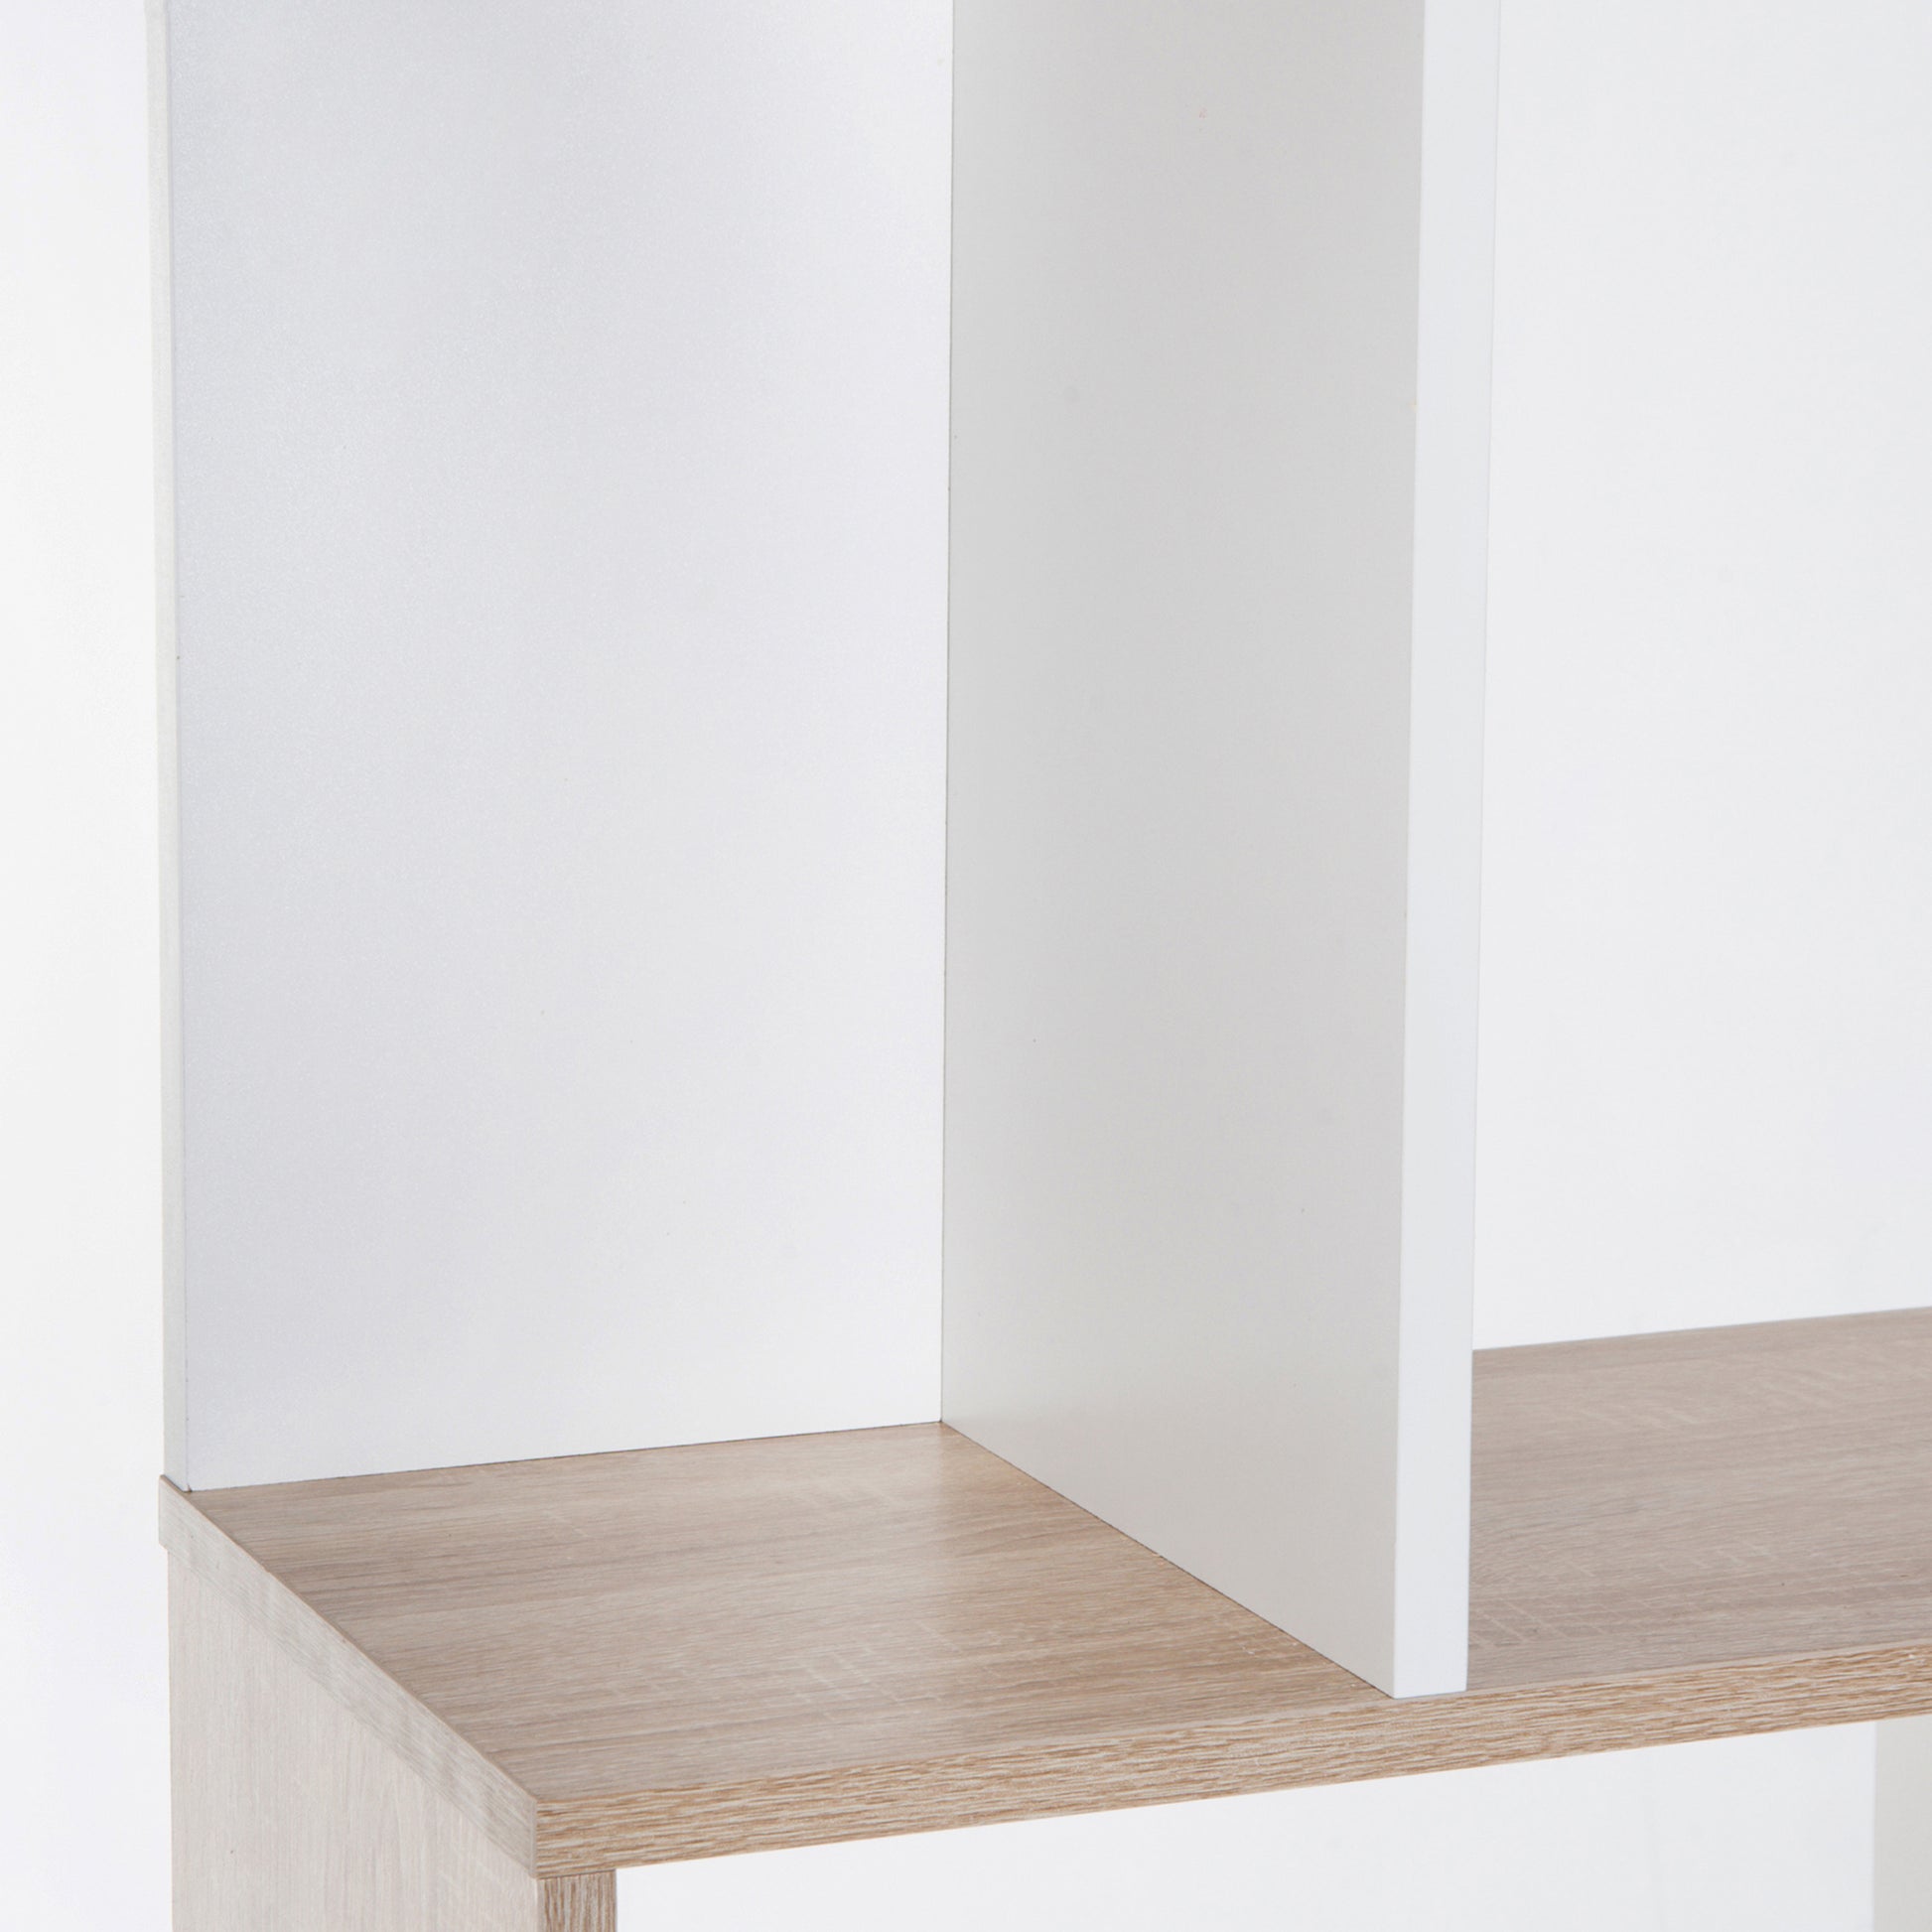 5-tier Bookcase, Storage Display Shelving, S Shape design Unit Divider, White, Wood Effect, HOMCOM, 6